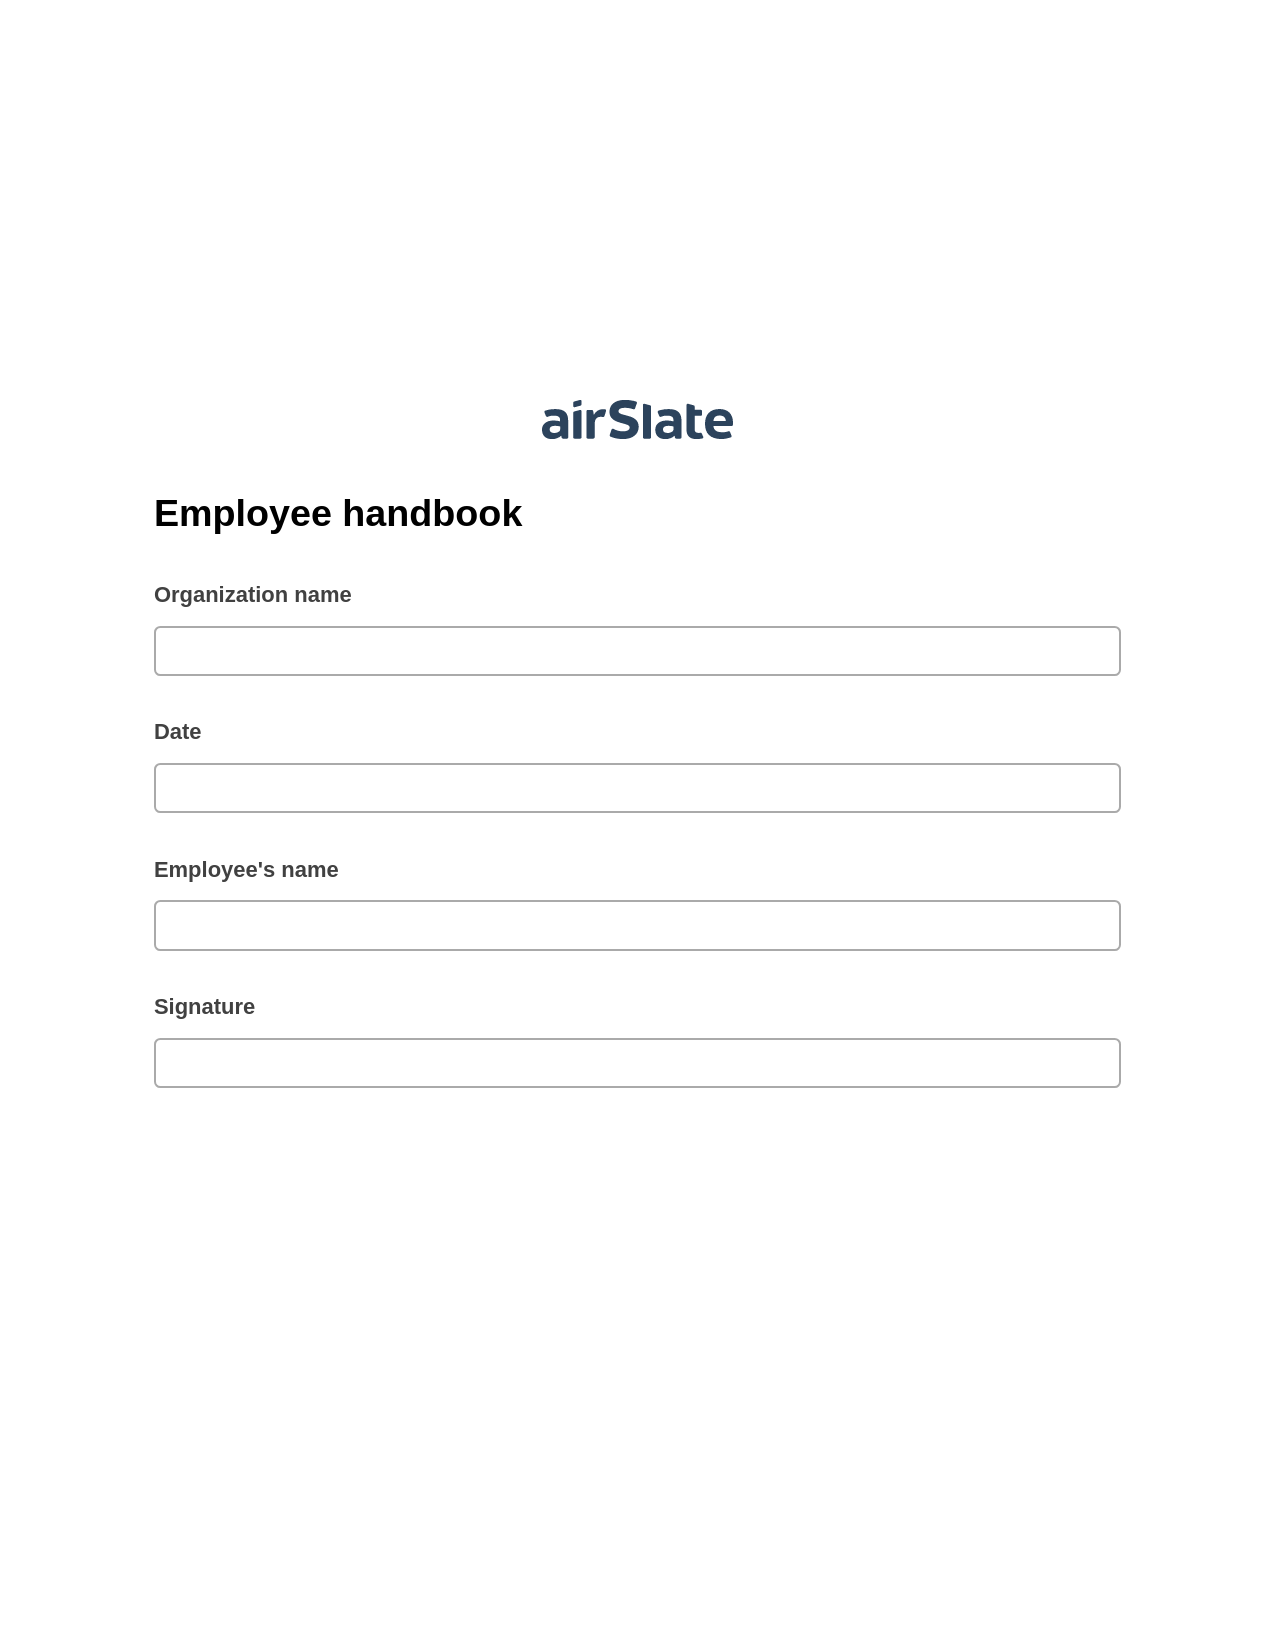 Multirole Employee handbook Pre-fill from Smartsheet Bot, Send Mailchimp Campaign Bot, Archive to SharePoint Folder Bot